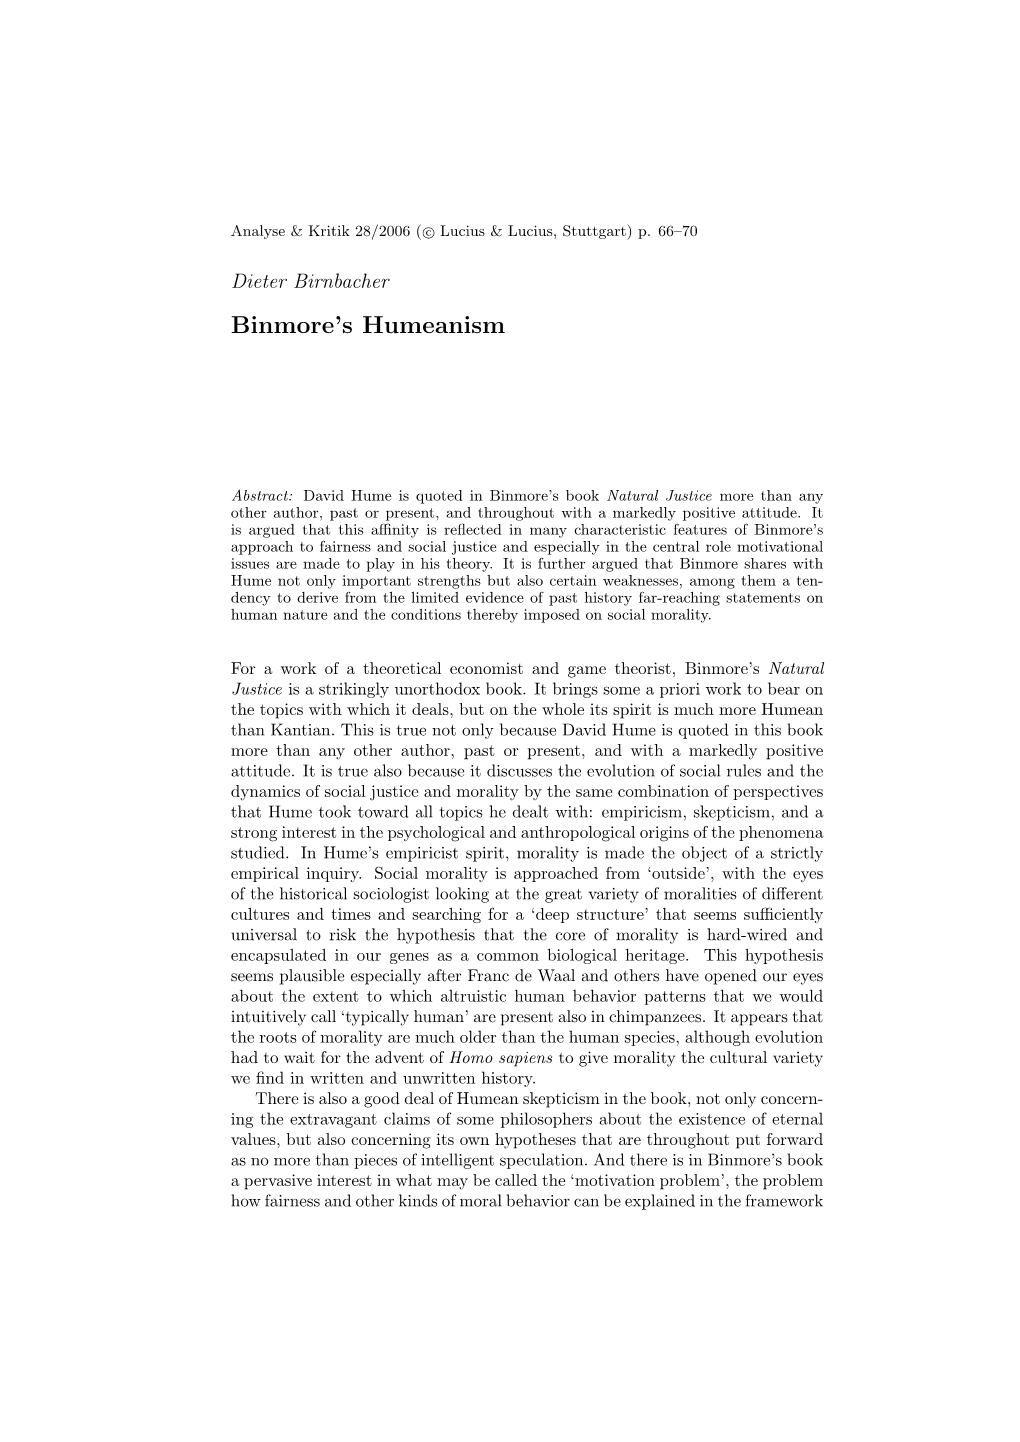 Binmore's Humeanism